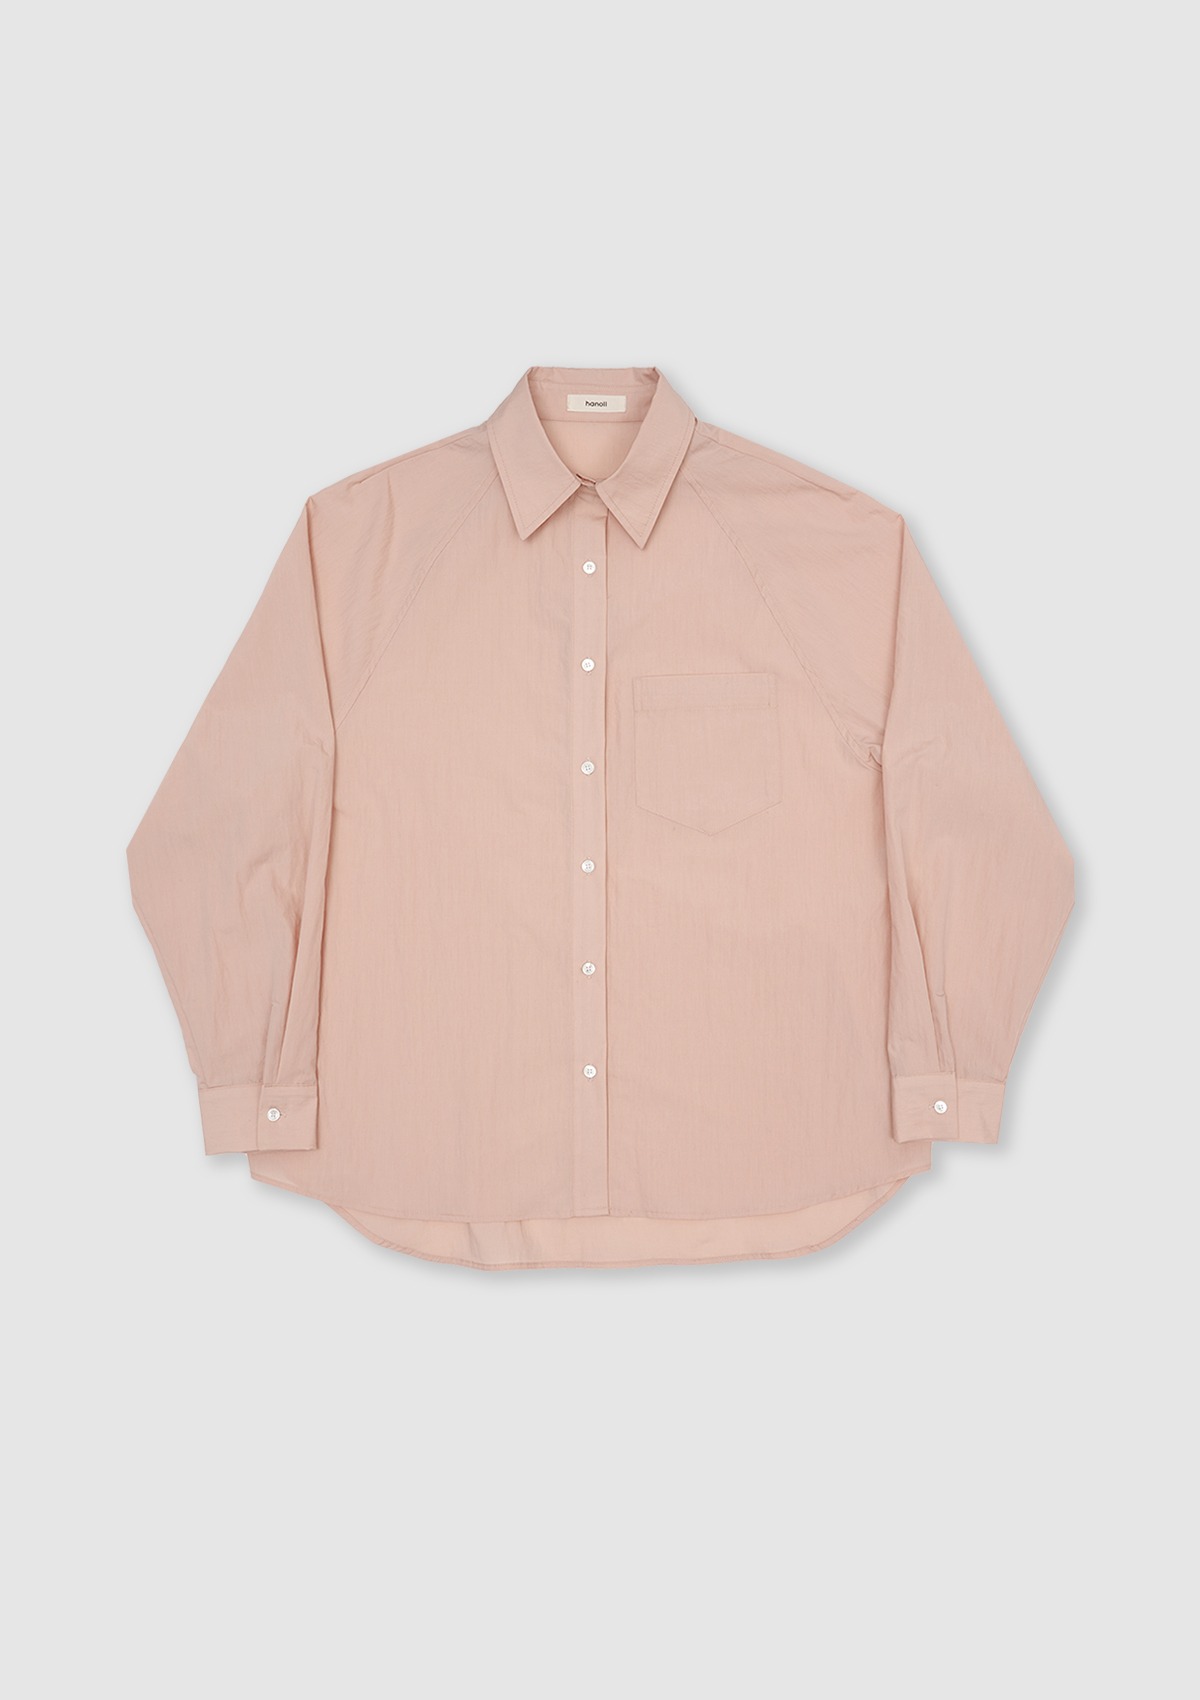 Raglan Shirt (Coral)